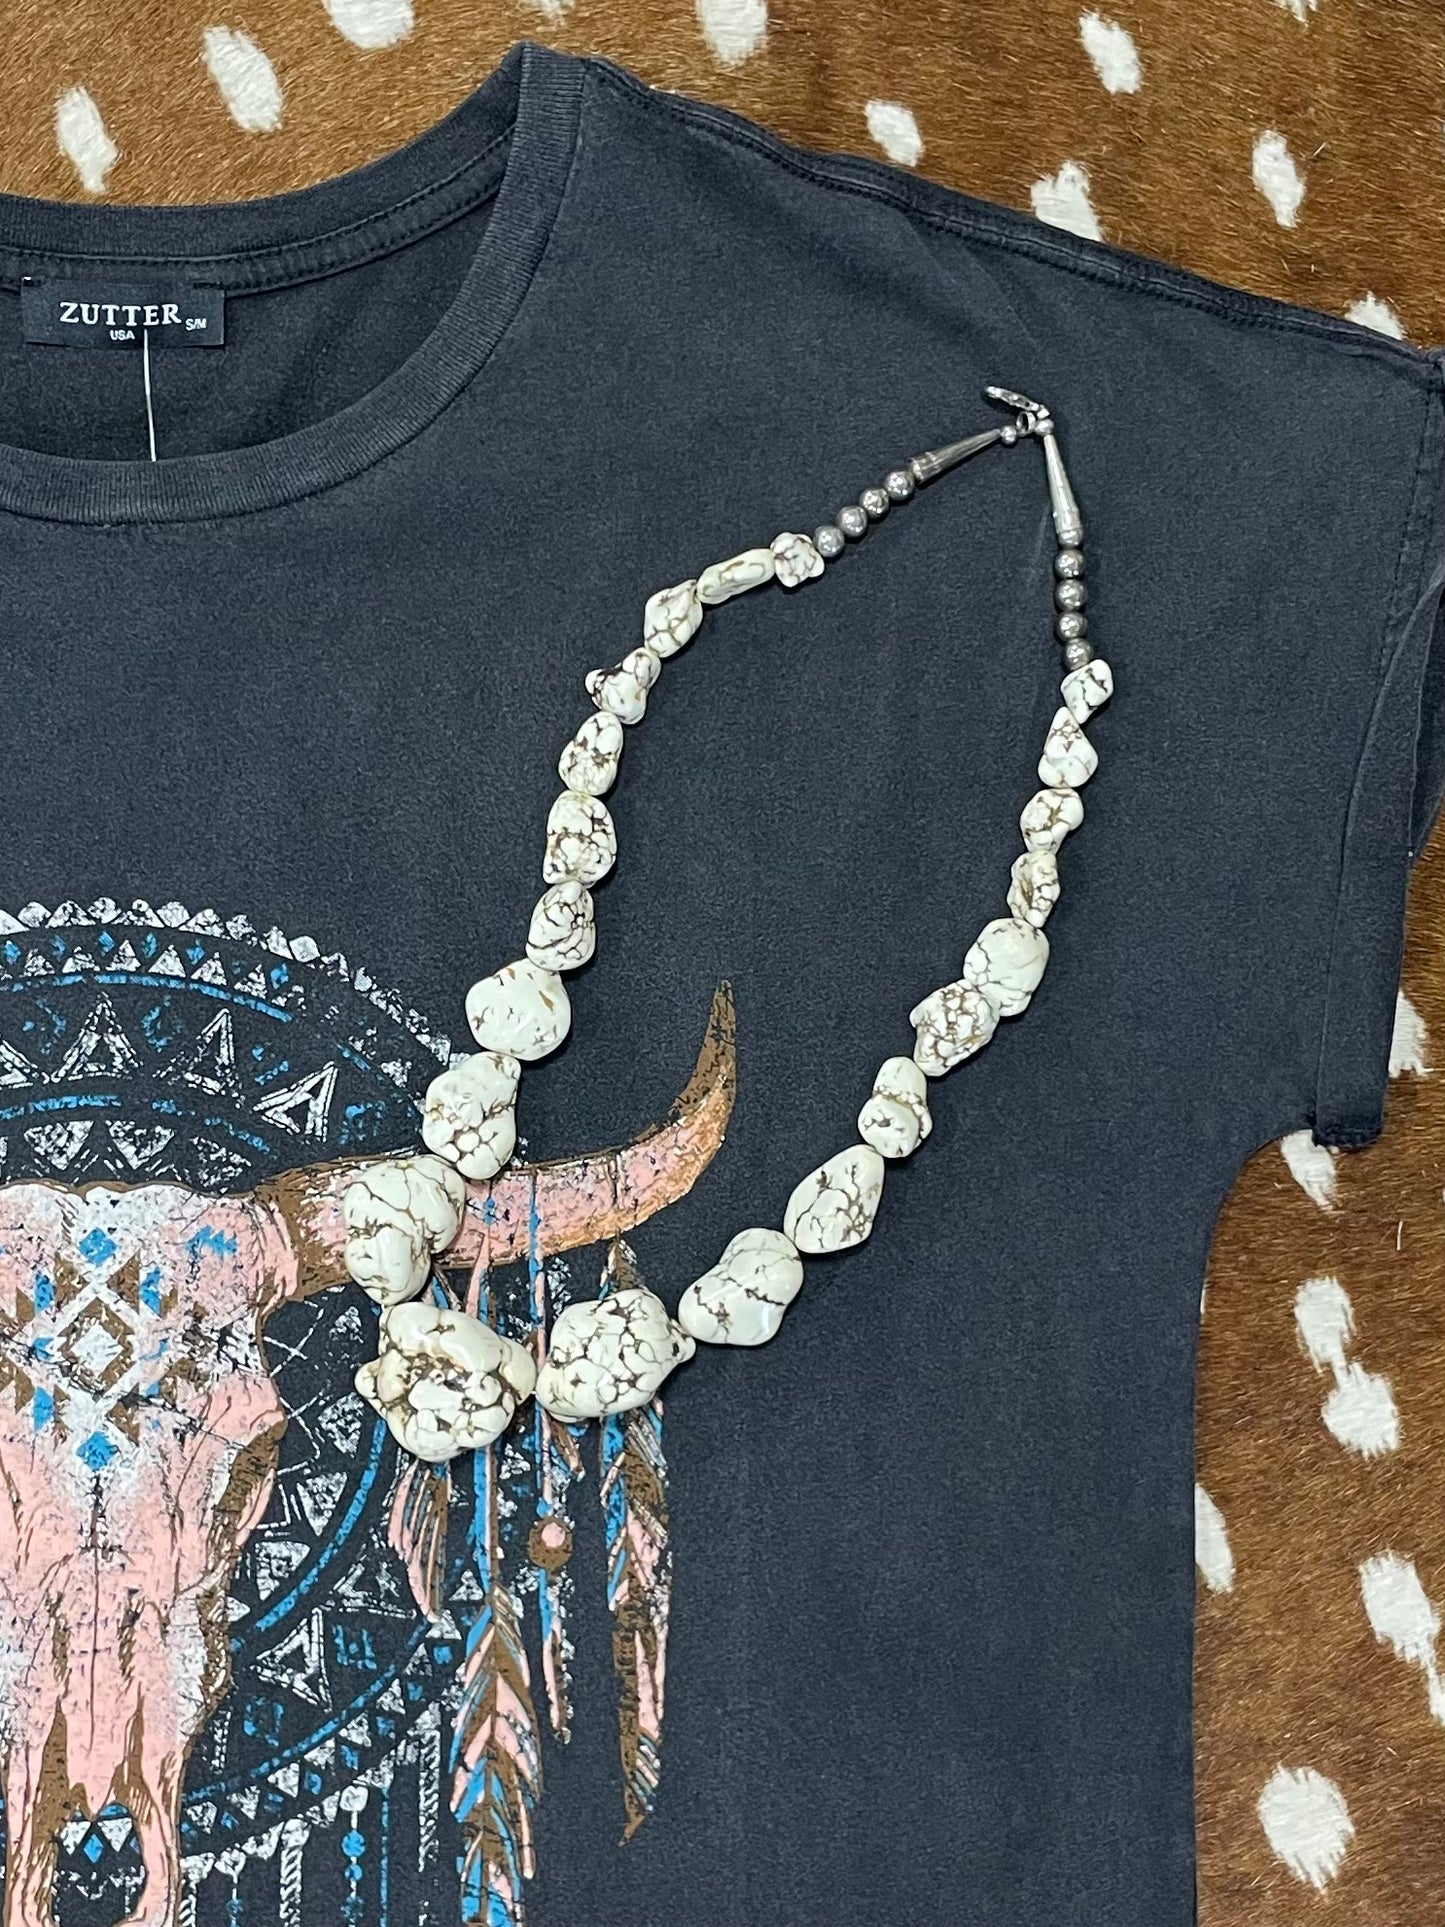 Desert Darling- White Buffalo Turquoise Necklace